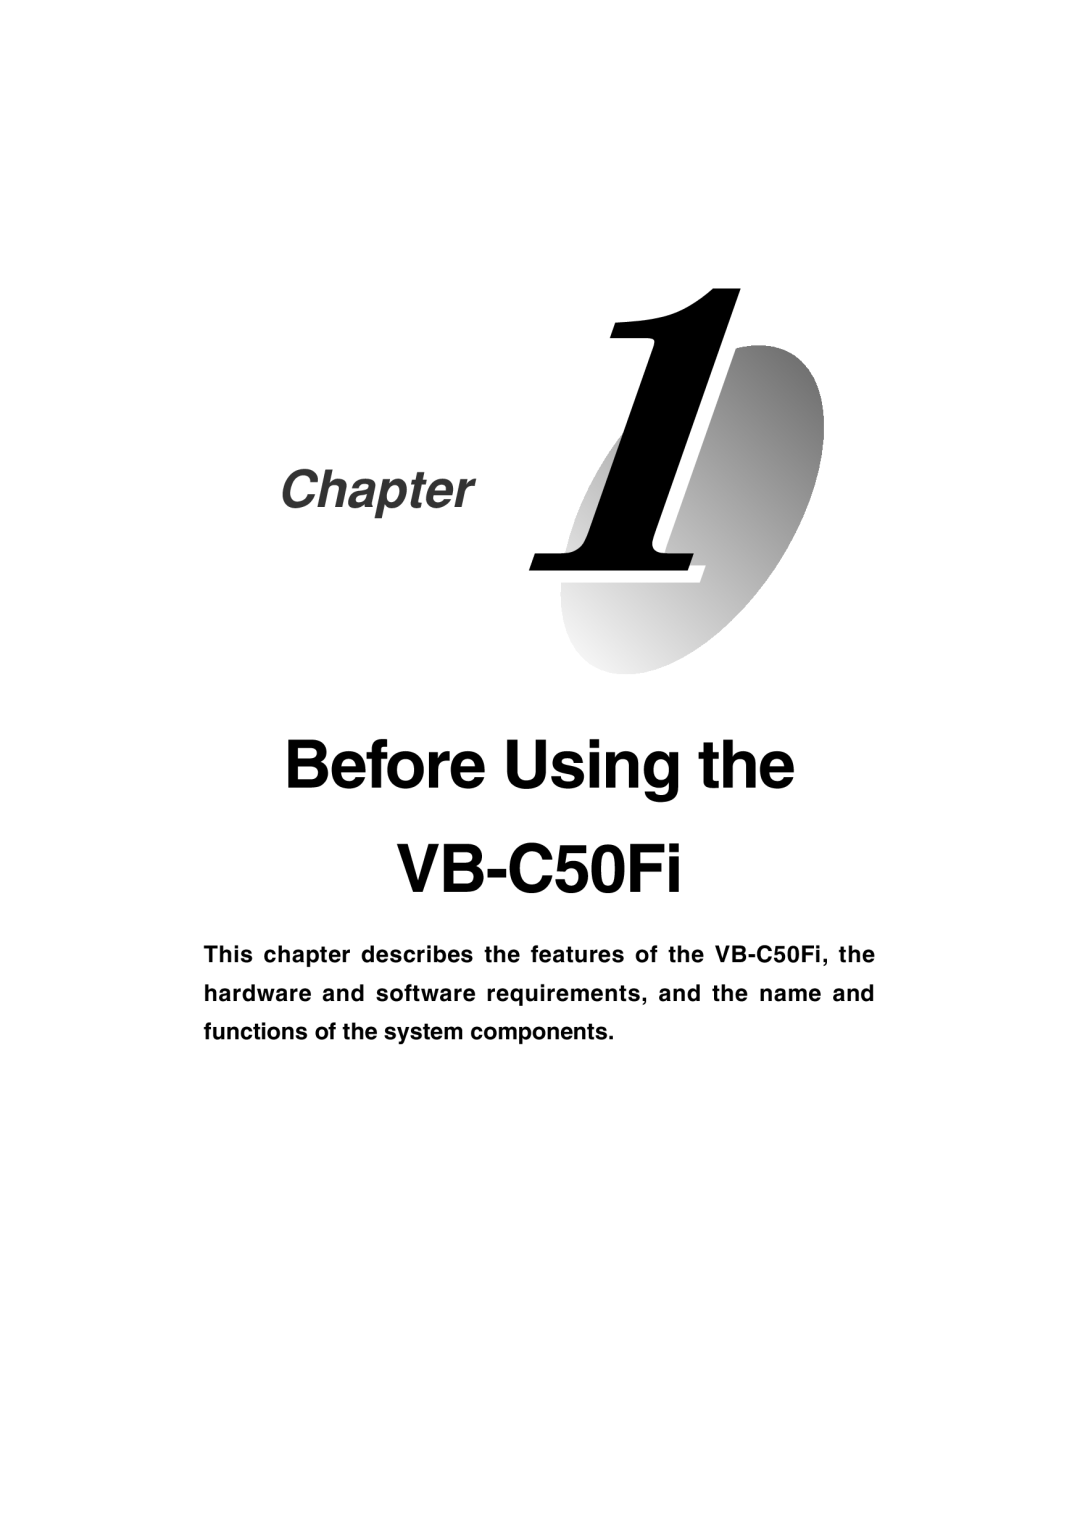 Canon Vb-C50fi user manual Before Using the VB-C50Fi, Chapter 